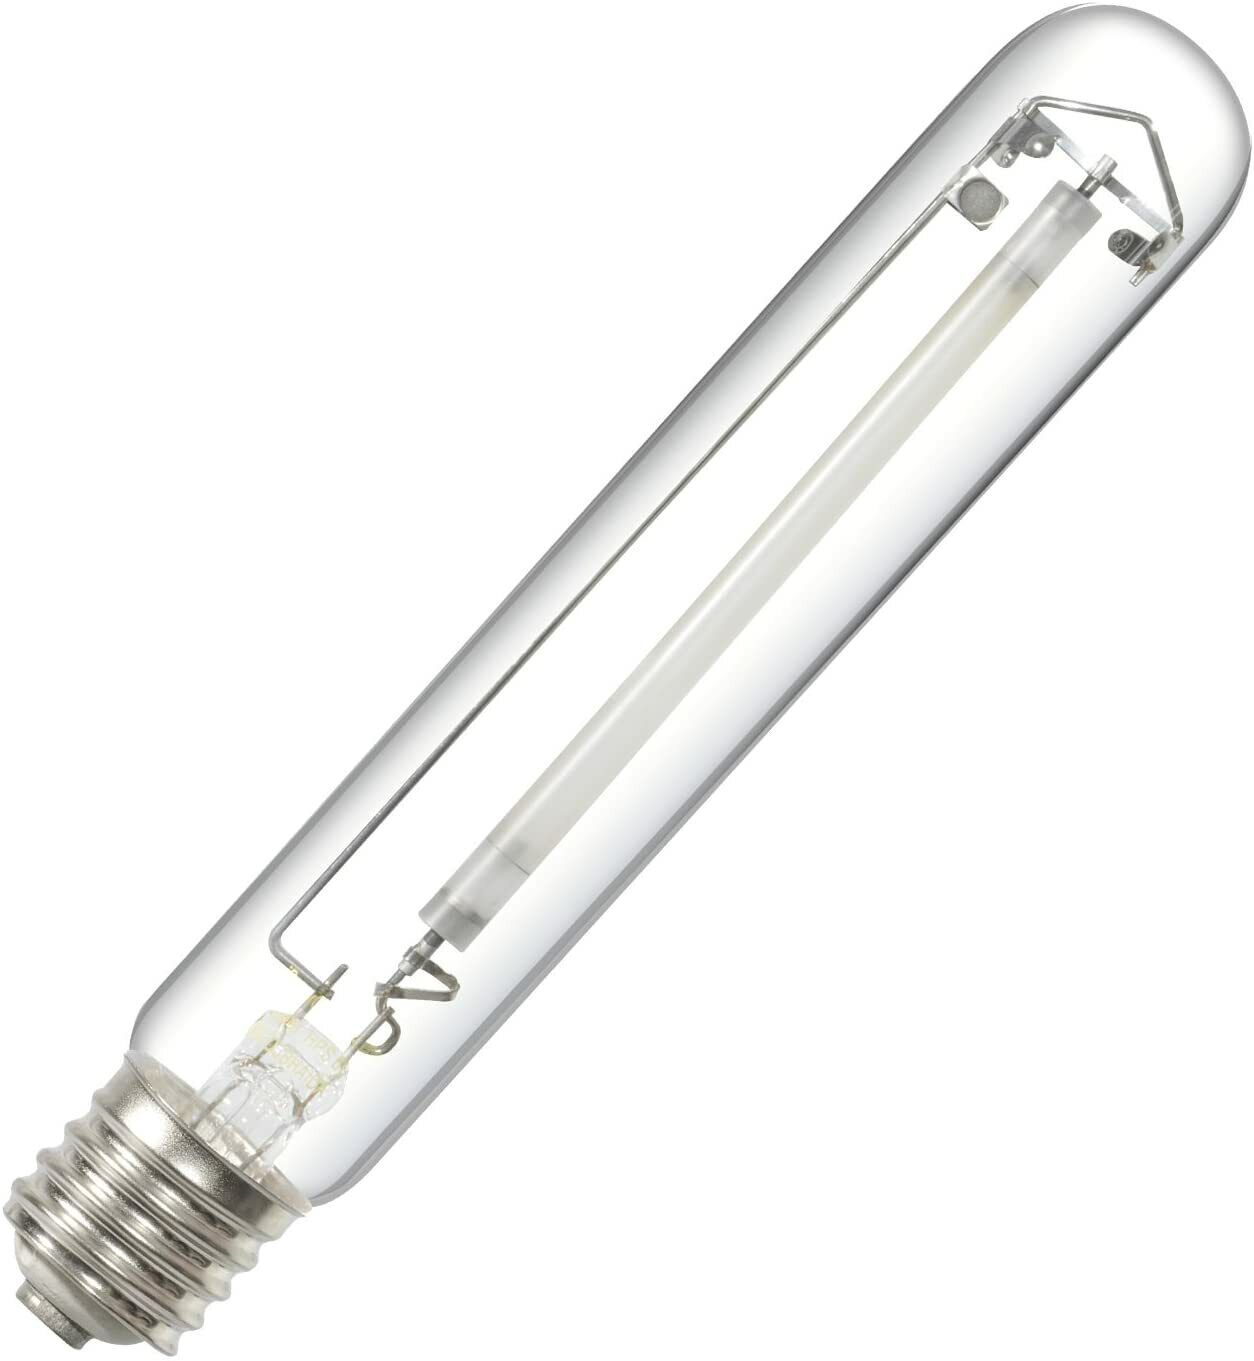 iPower 400 Watt Hydroponic High Pressure Sodium HPS Grow Light Bulb 1/2/4/6-PACK